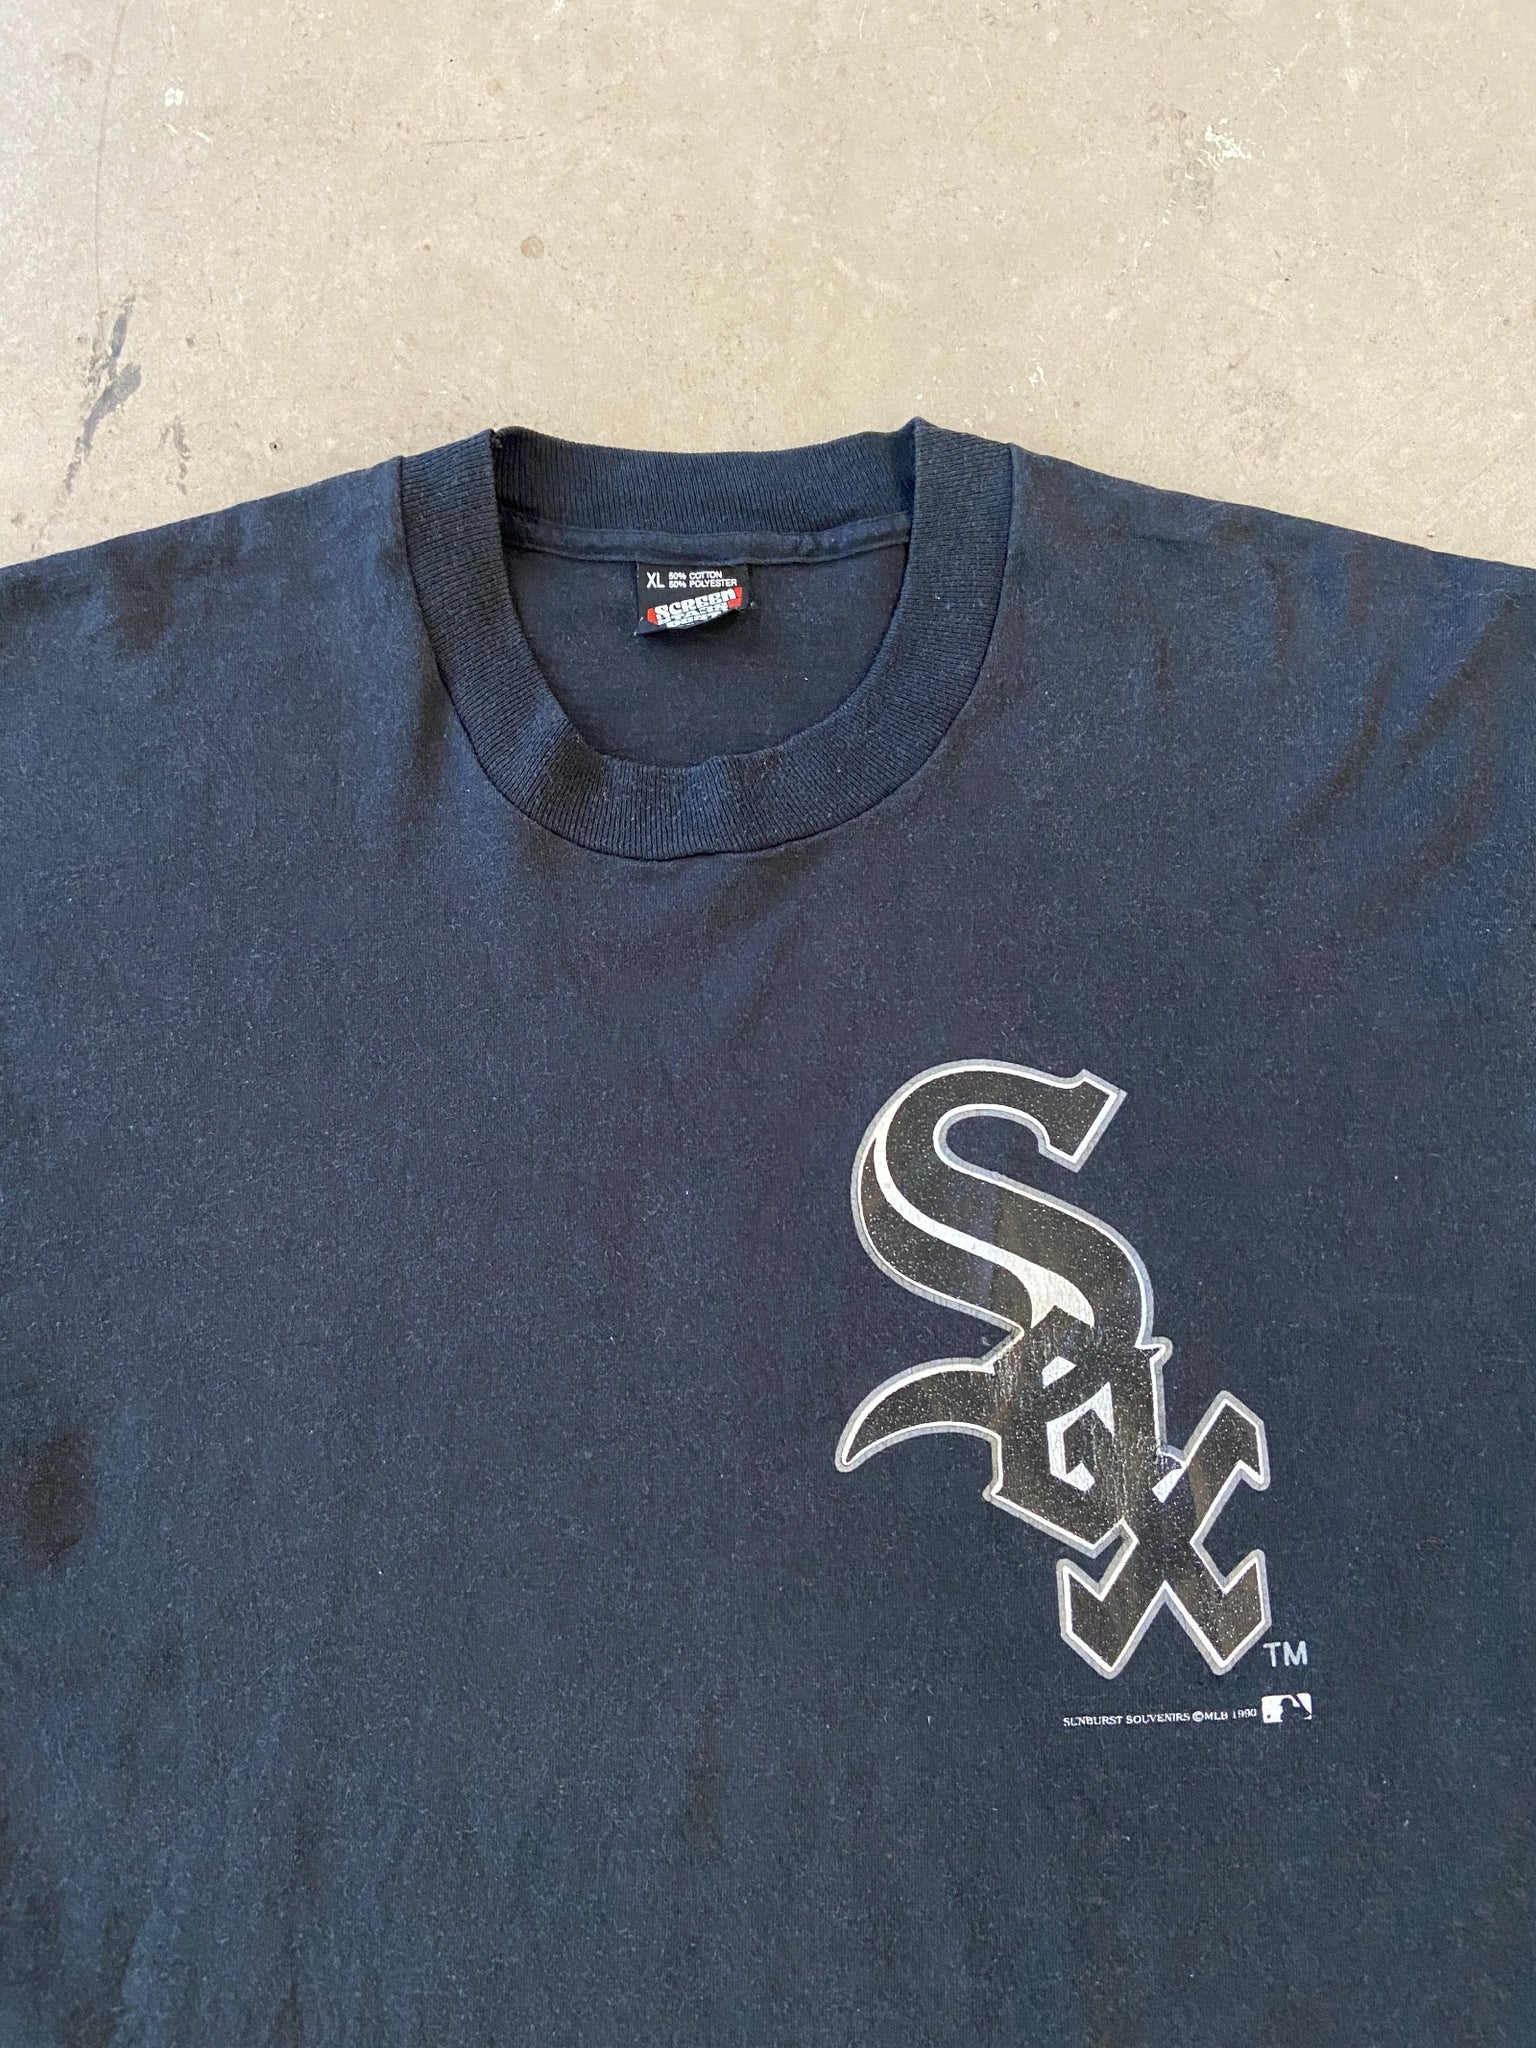 1990 Chicago White Sox T-shirt - XL